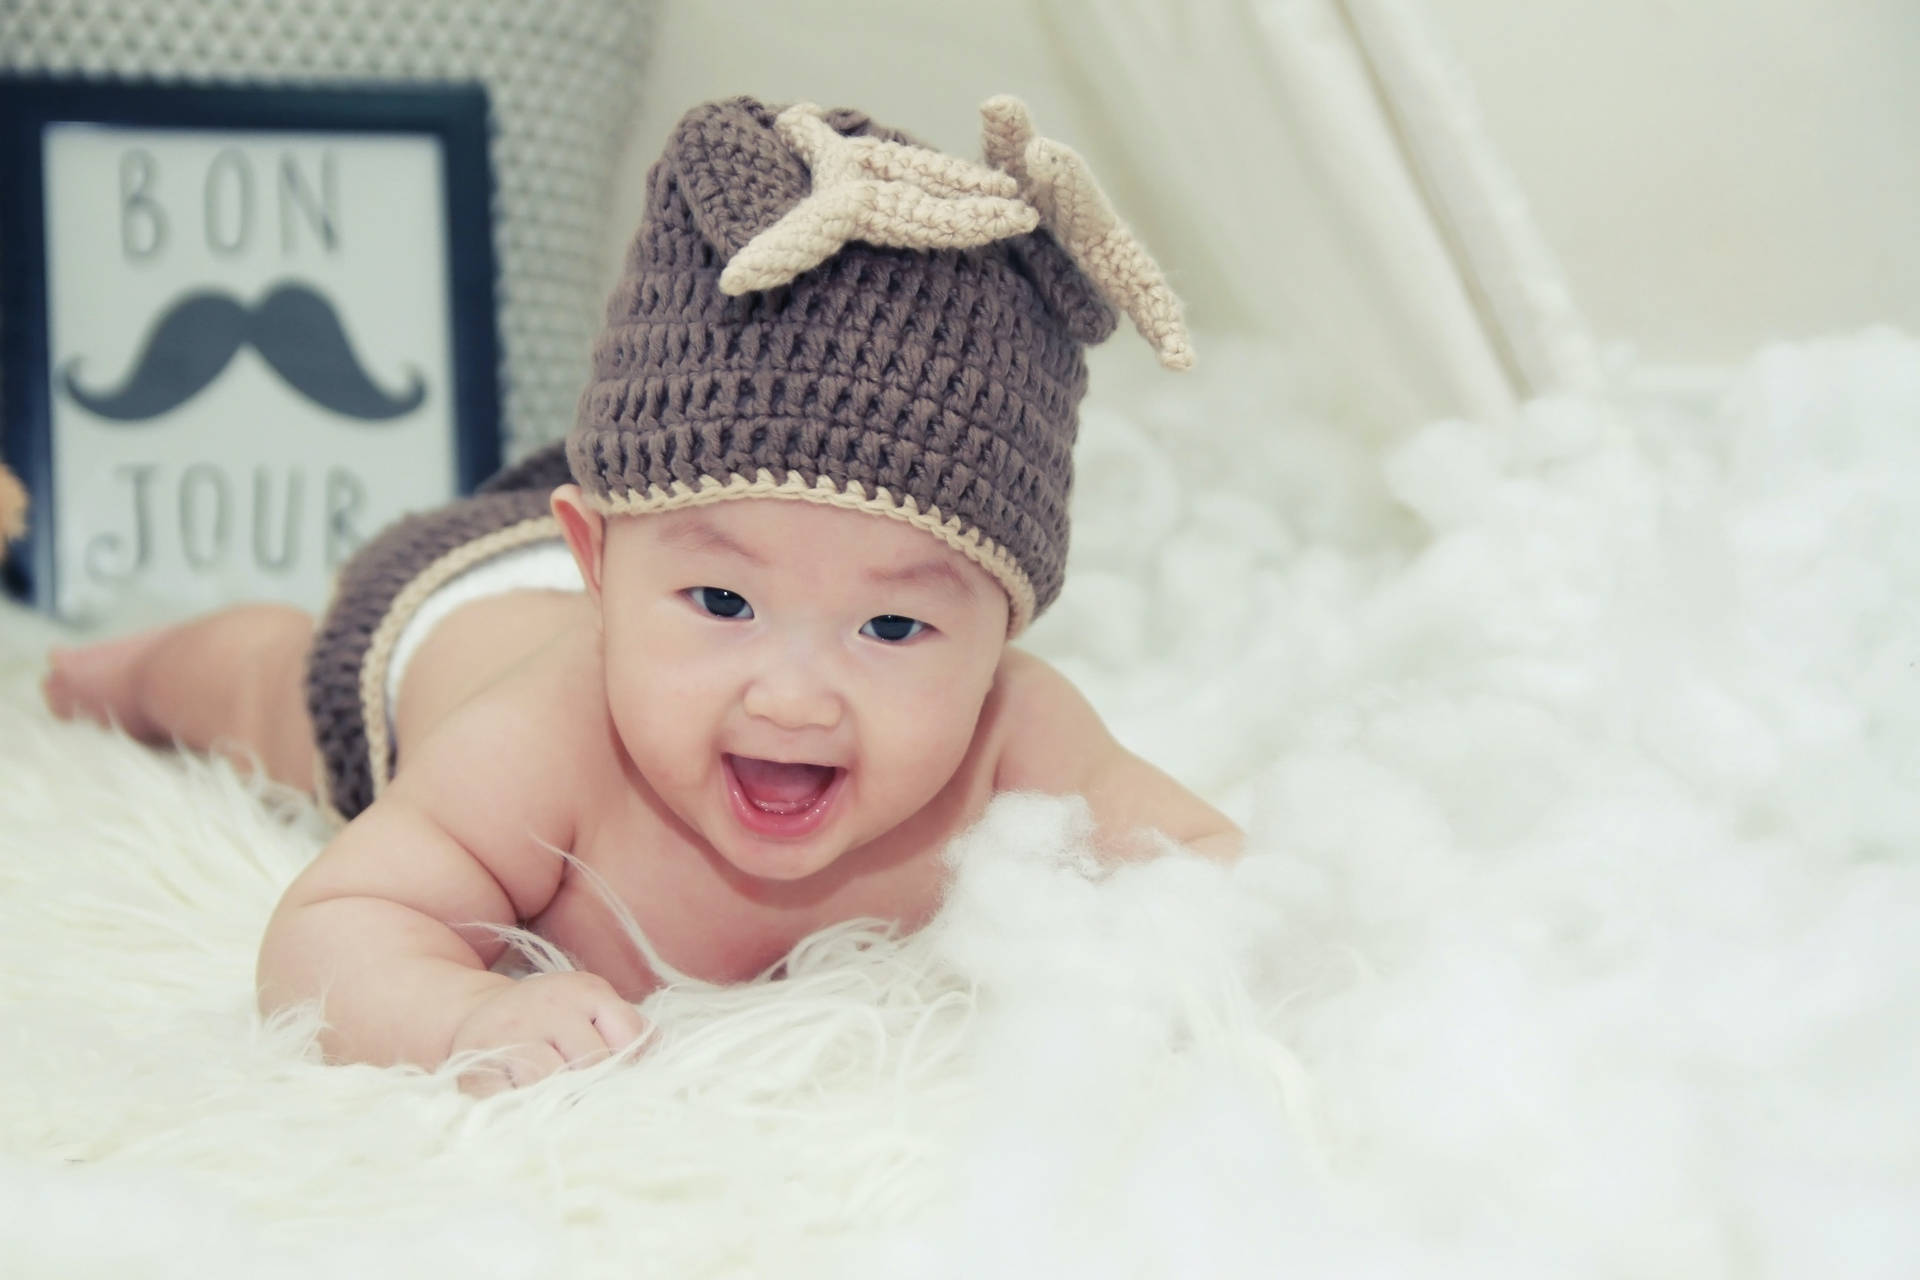 Very Cute Baby Wearing Beanie Hat